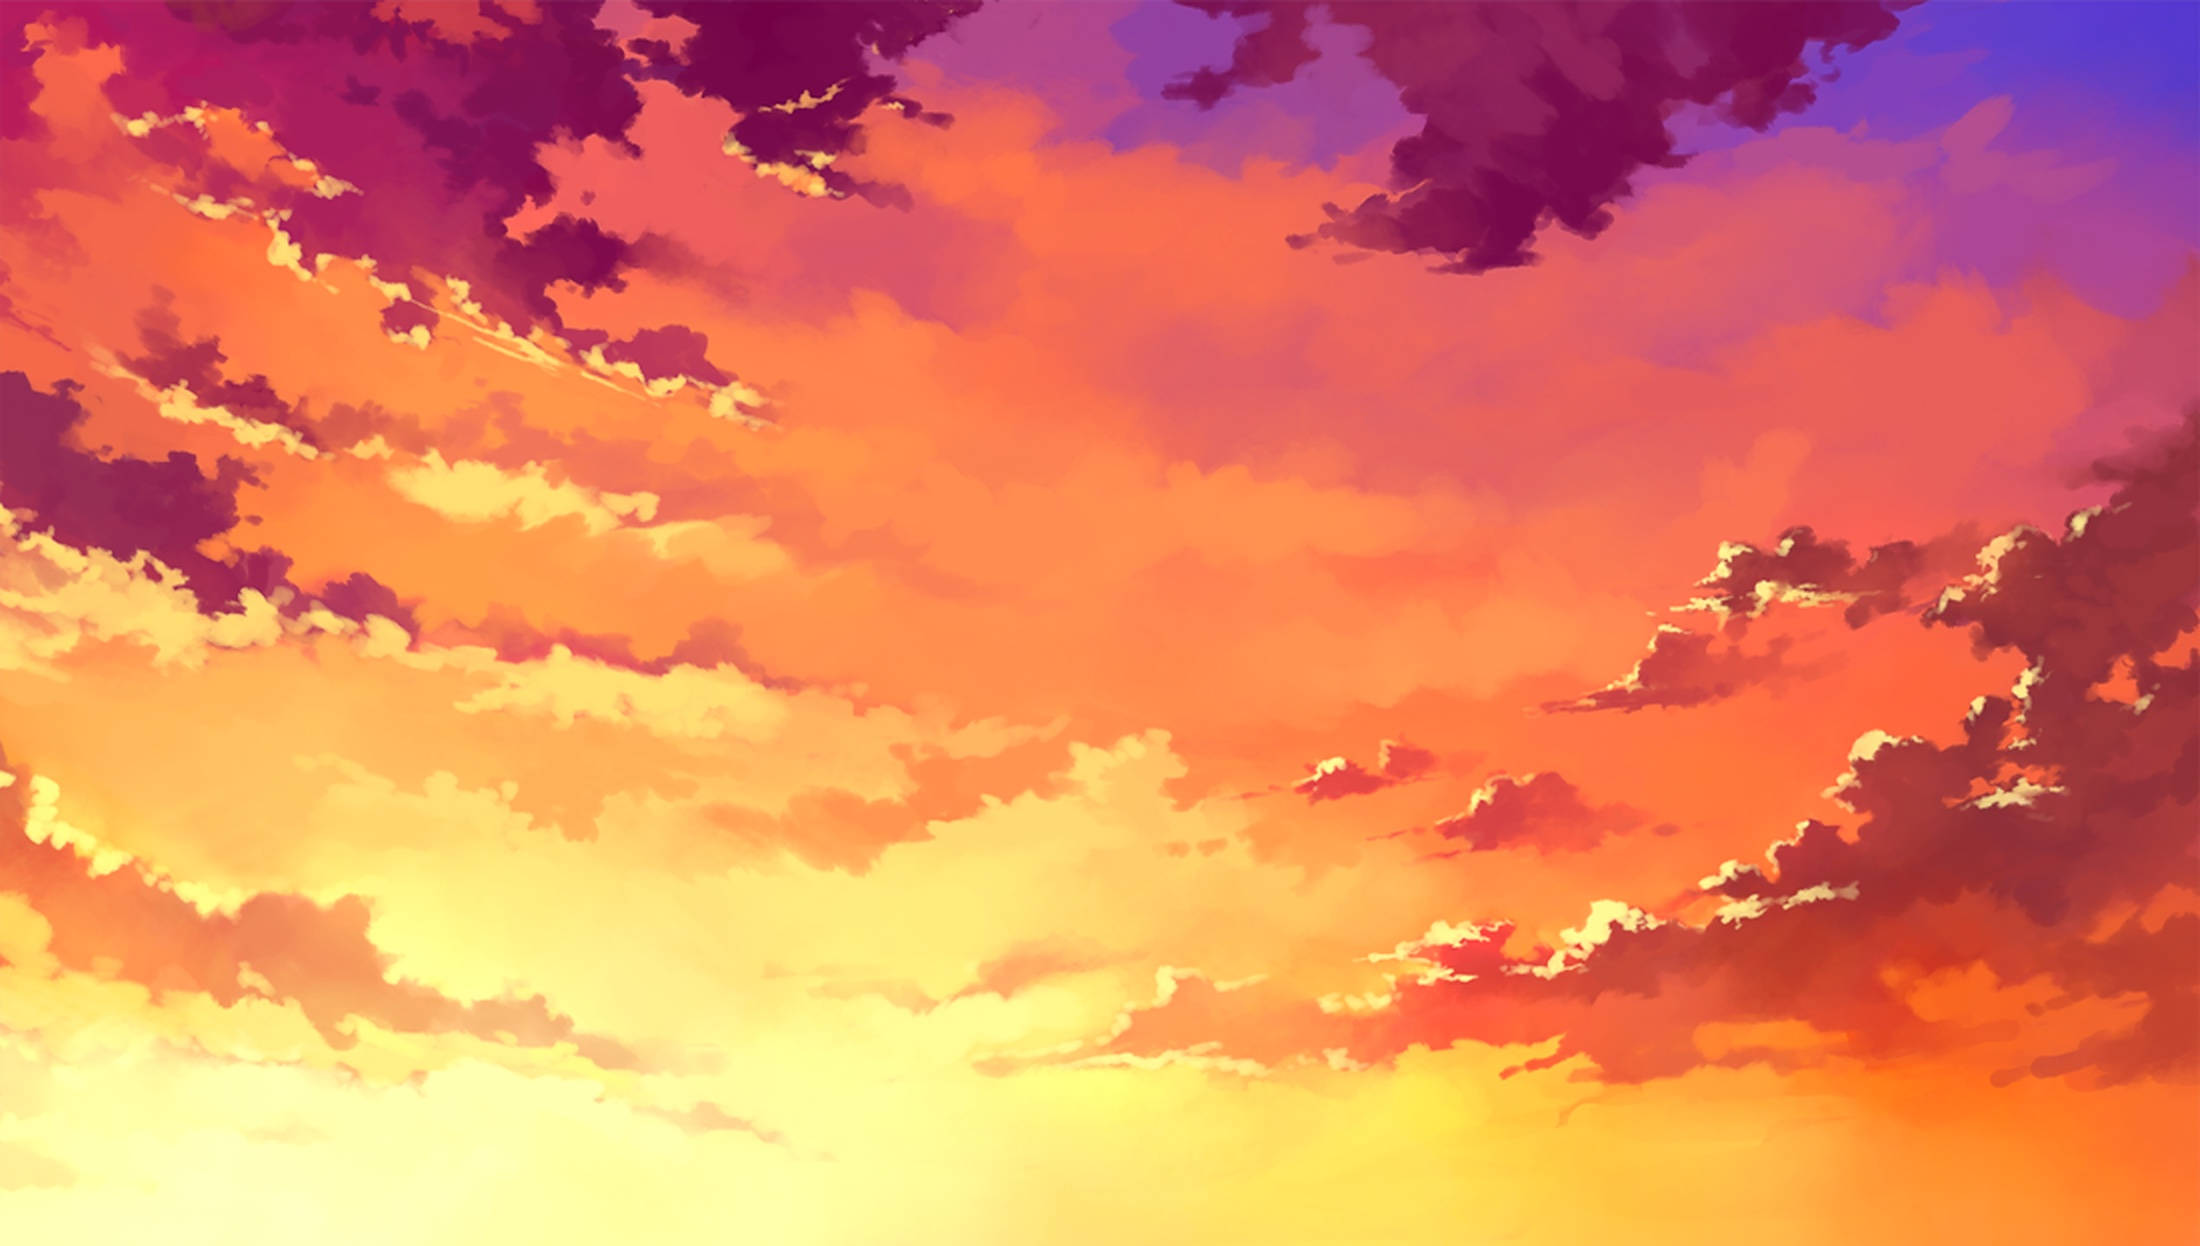 Download Orange Clouds In Sunset Sky Wallpaper